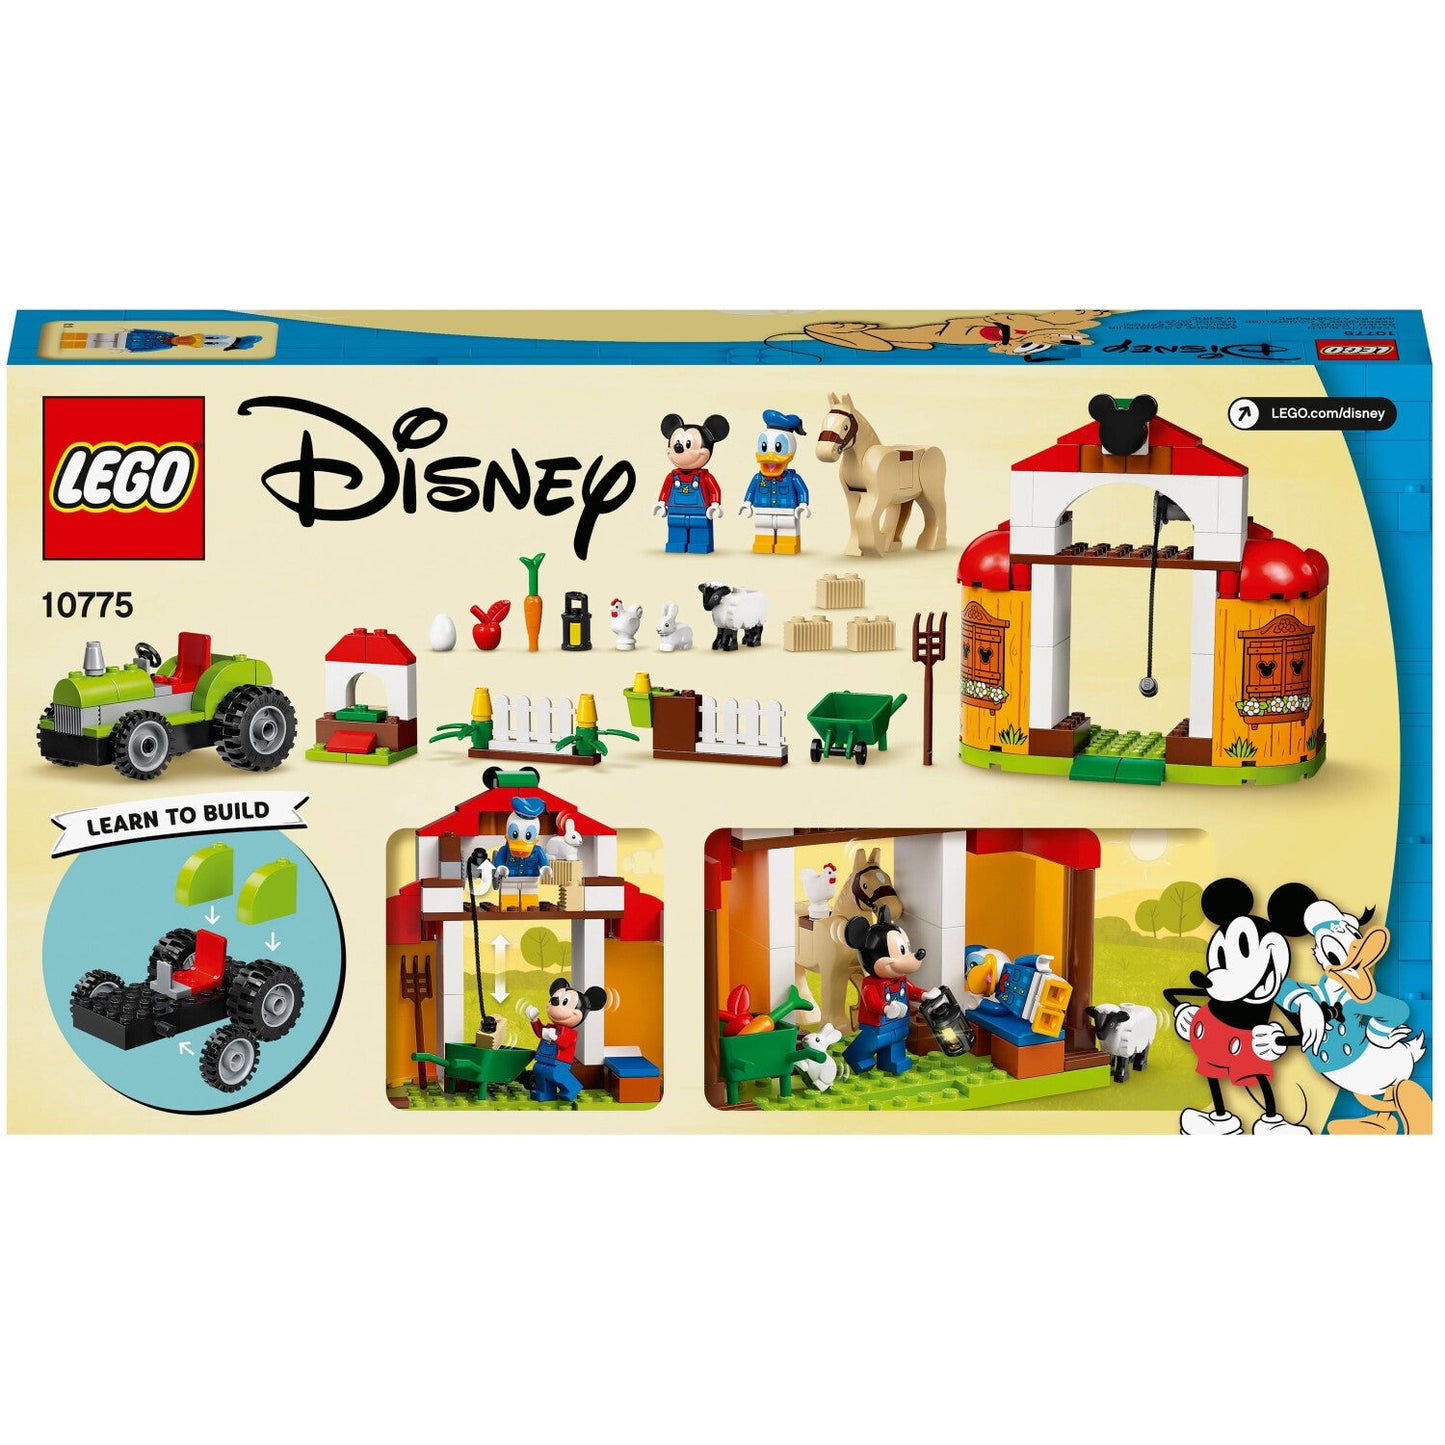 LEGO 10775 Disney Mickys und Donald Duck's Farm ab 4+